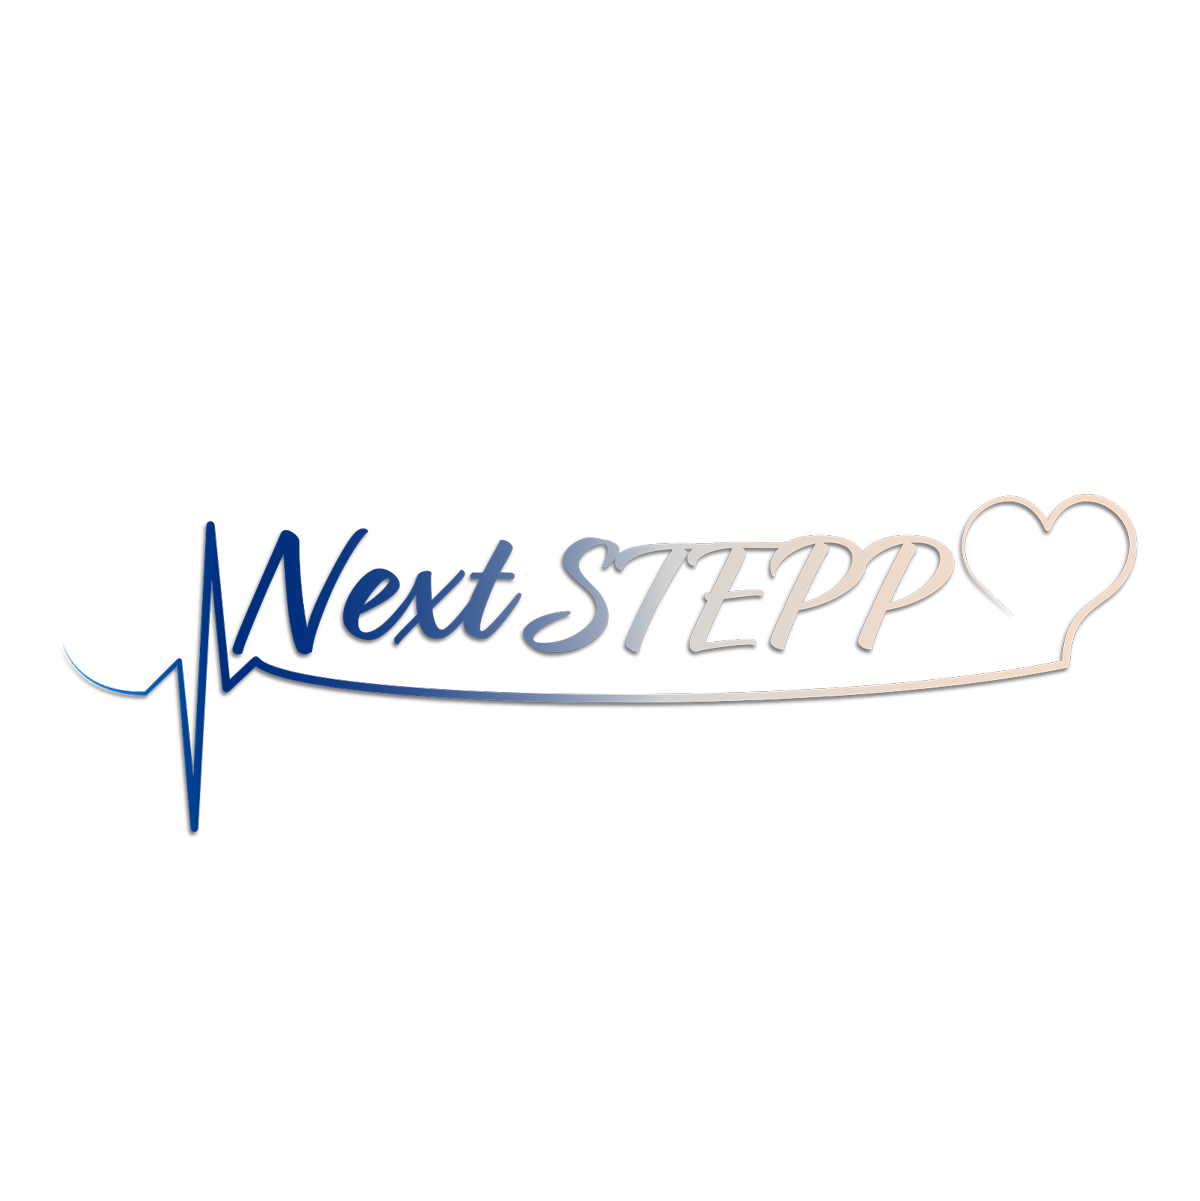 Next STEPP Pregnancy Center